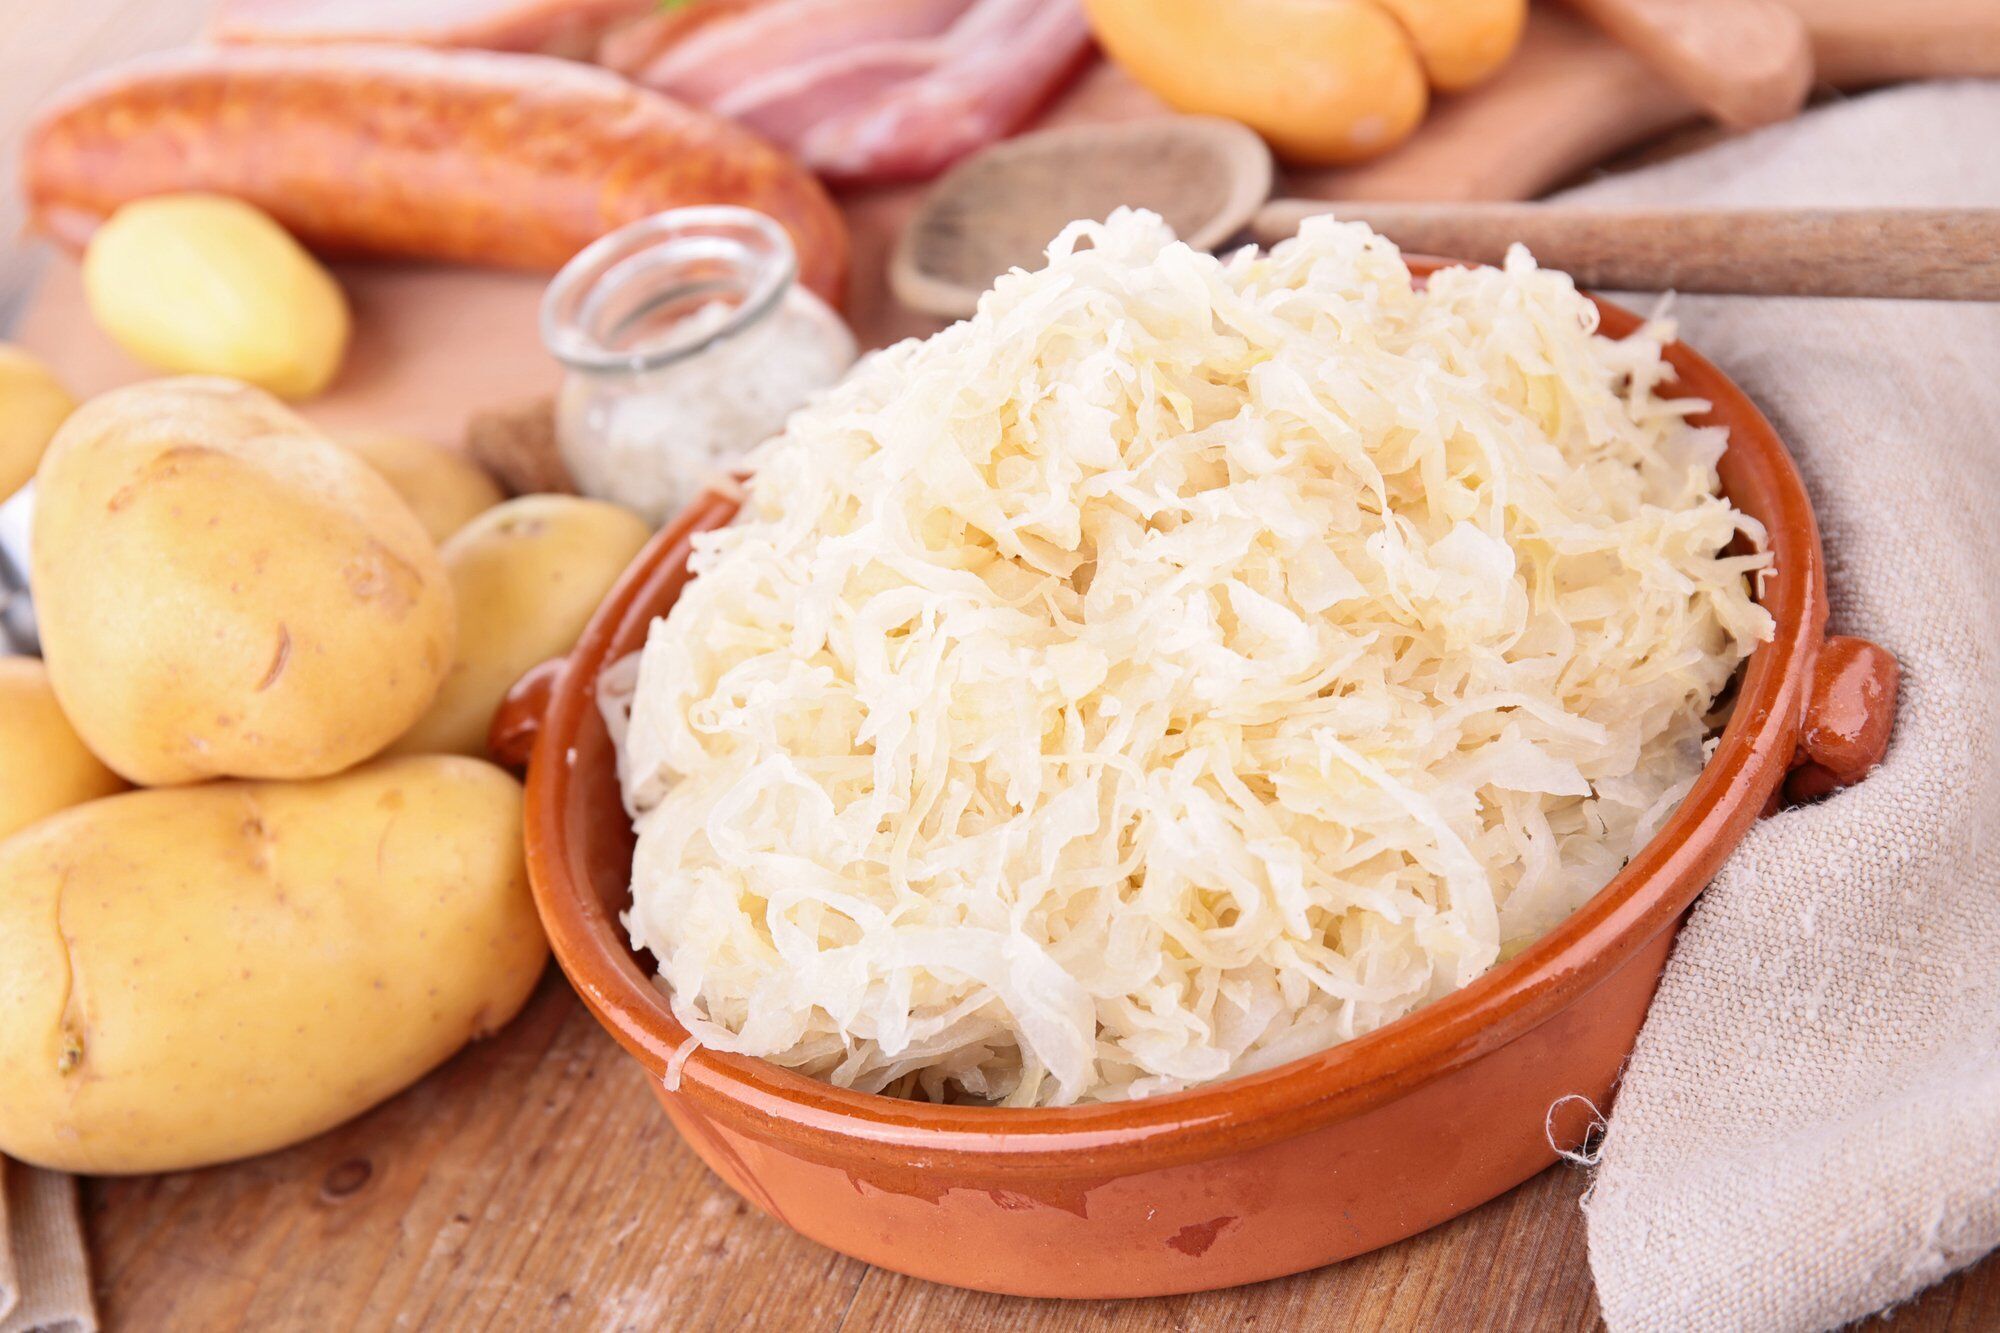 Delicious and healthy sauerkraut